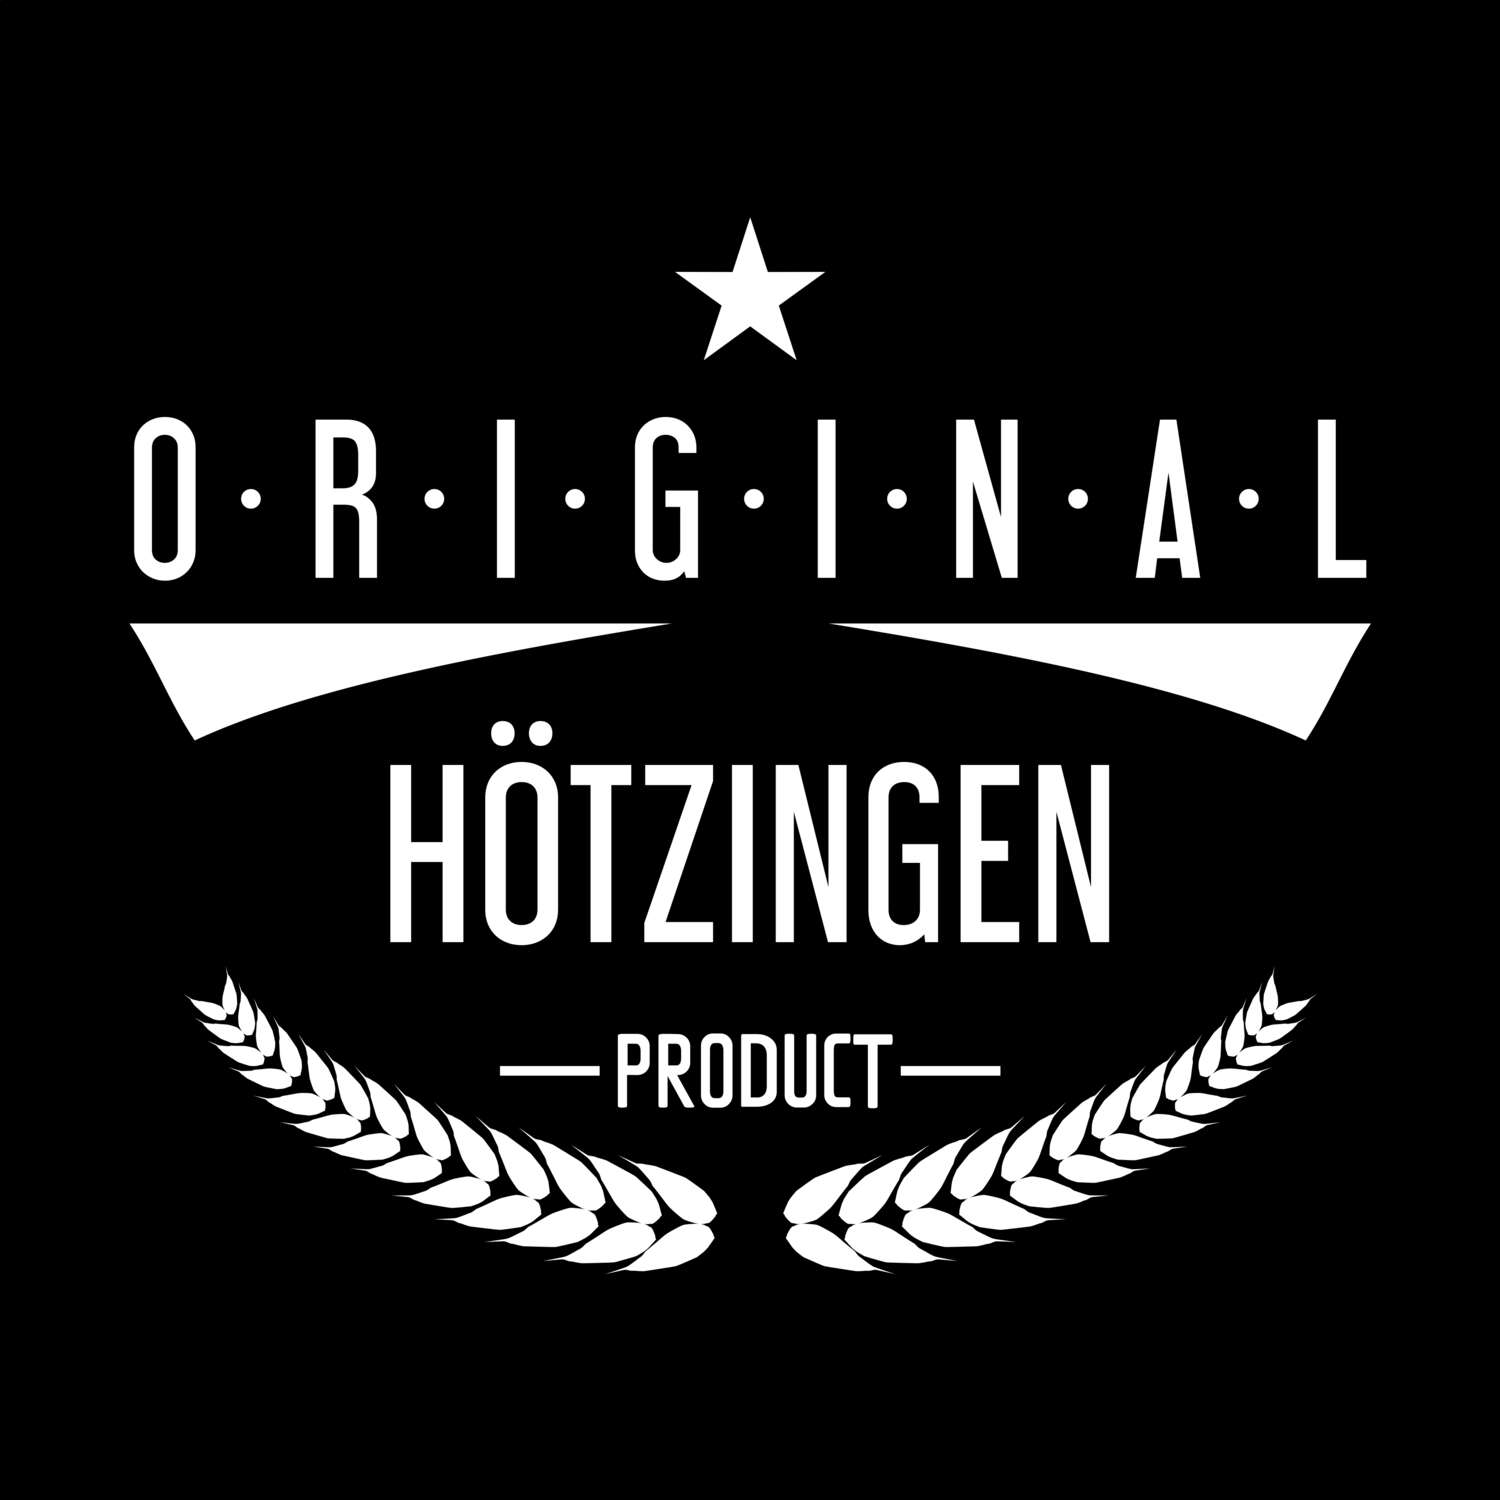 Hötzingen T-Shirt »Original Product«